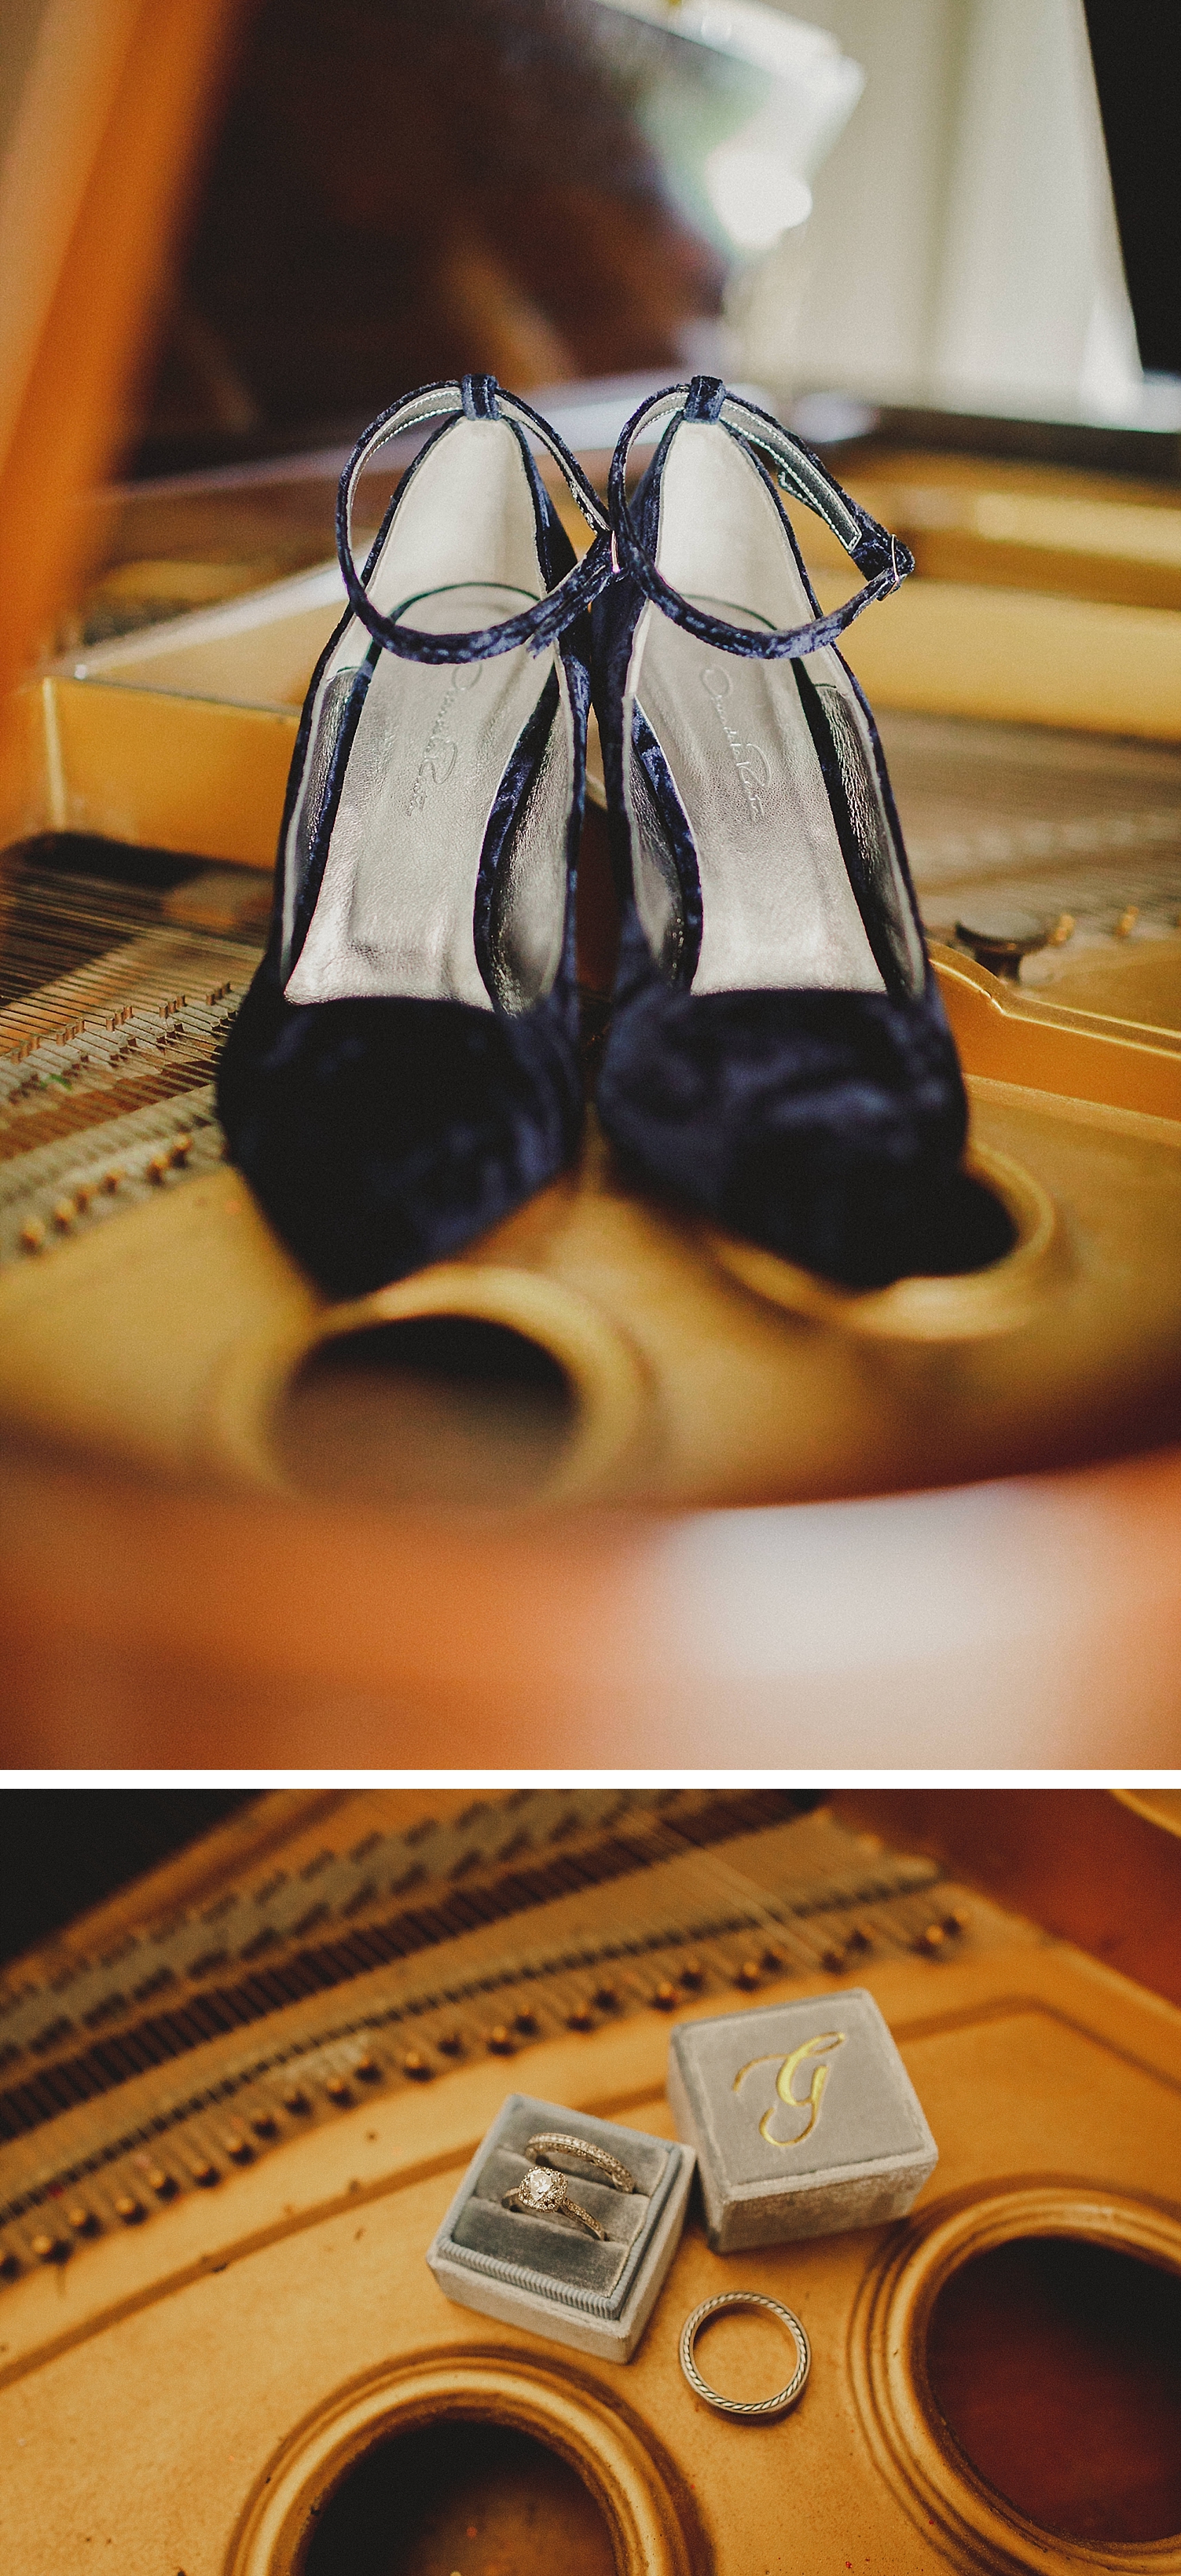 Oscar De La Renta bridal shoes and wedding ring